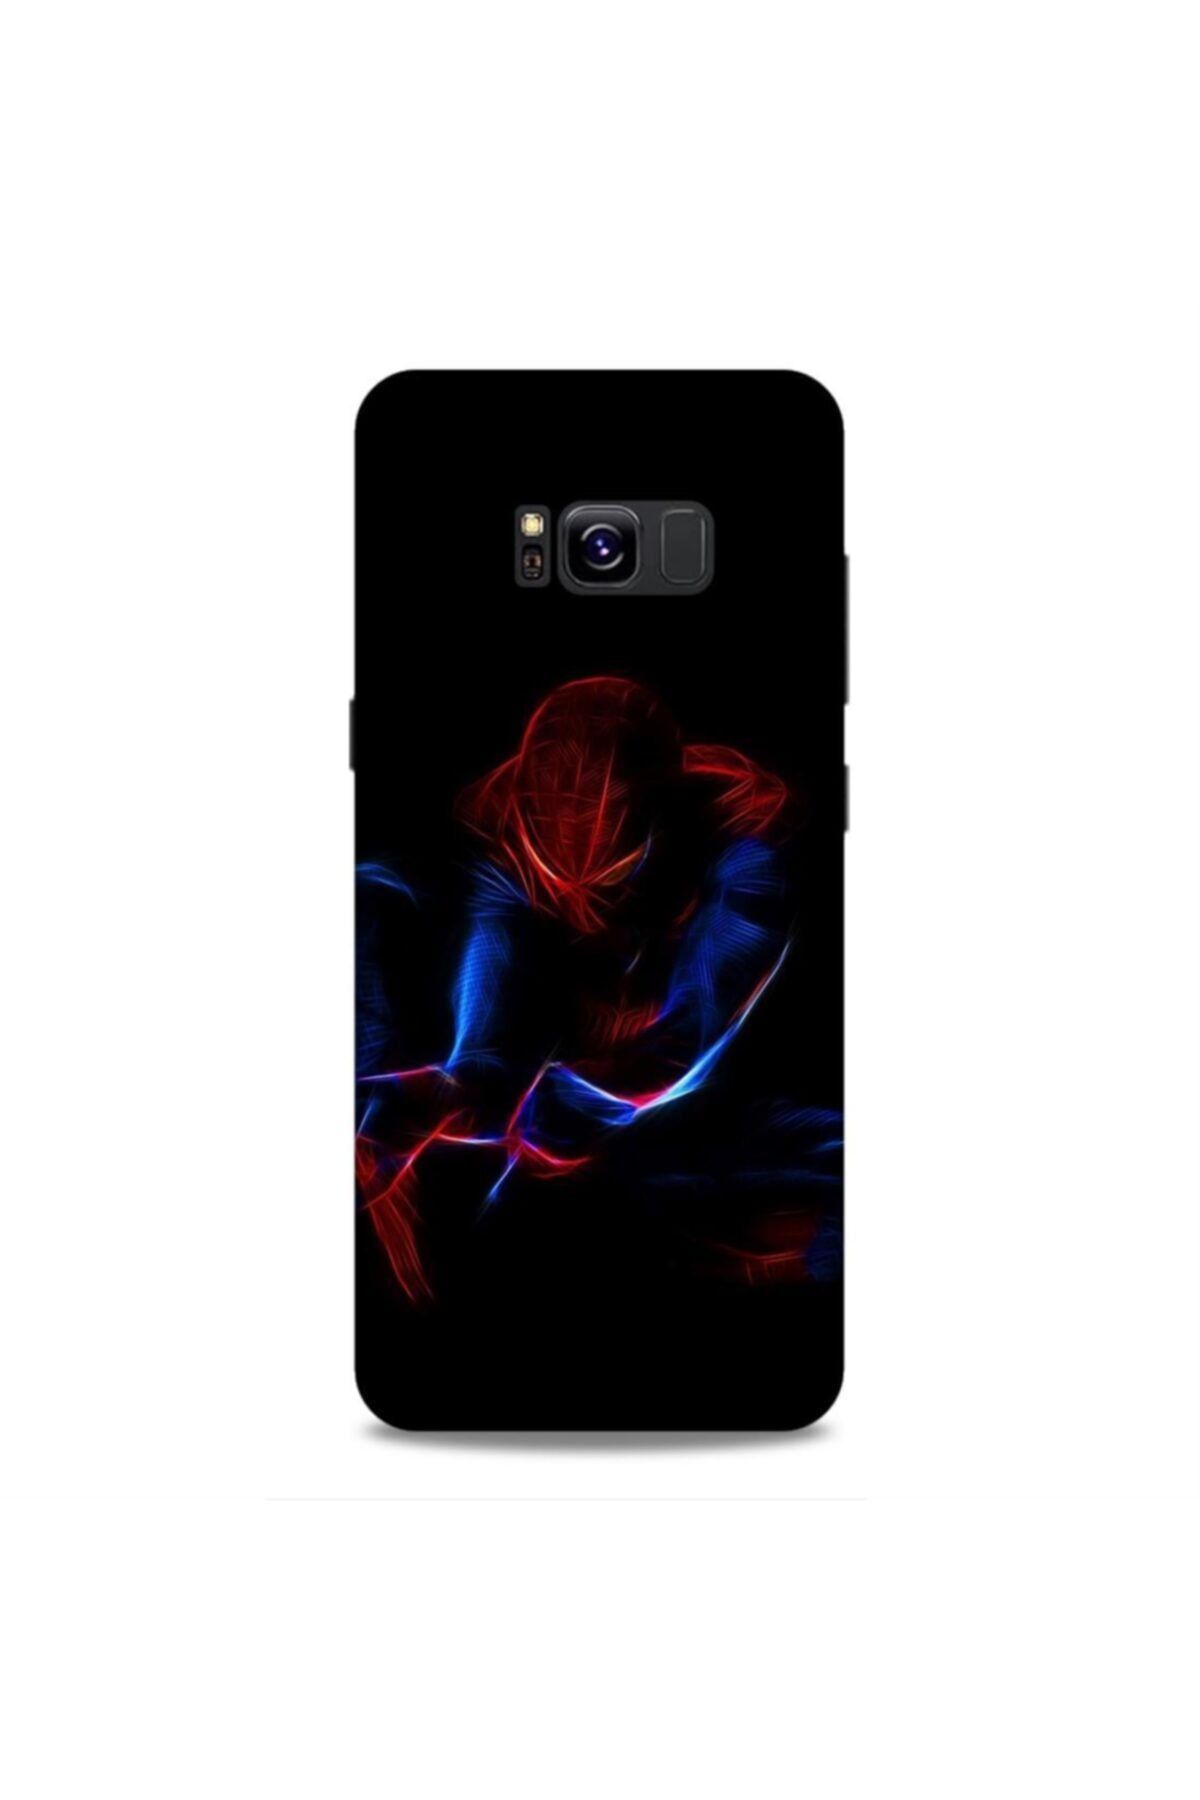 Pickcase Samsung Galaxy S8 Plus Kılıf Desenli Arka Kapak Spiderman